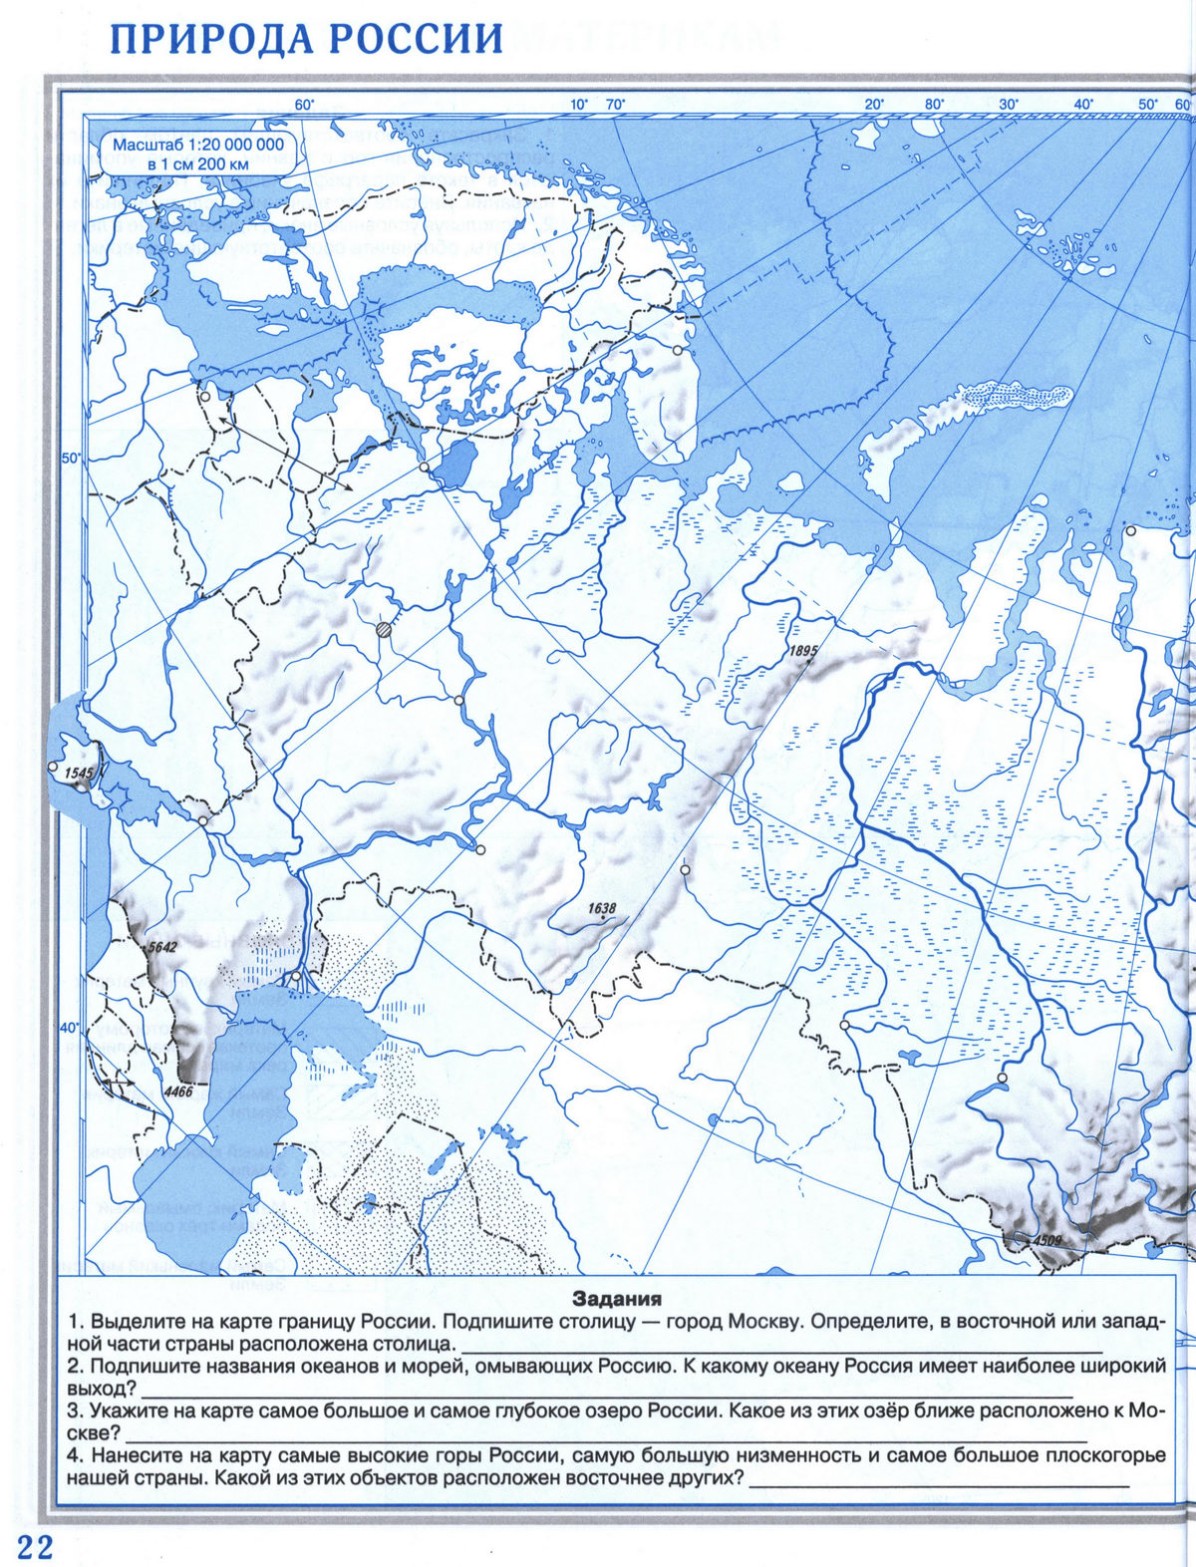 Описание страны канада по плану 7 класс география